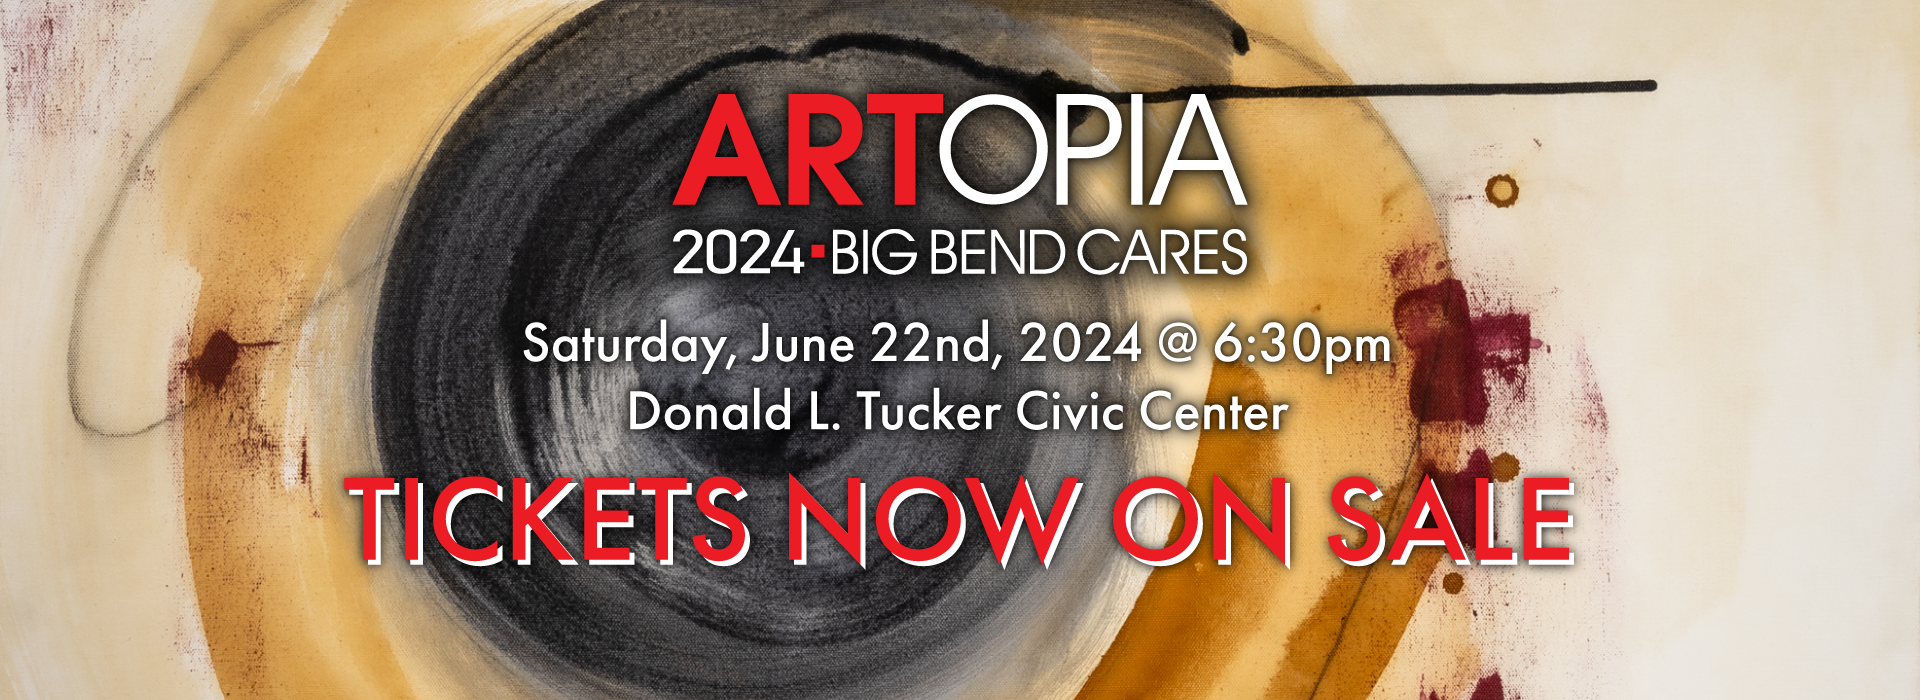 Artopia 2024 Tickets Now On Sale LayerSlider